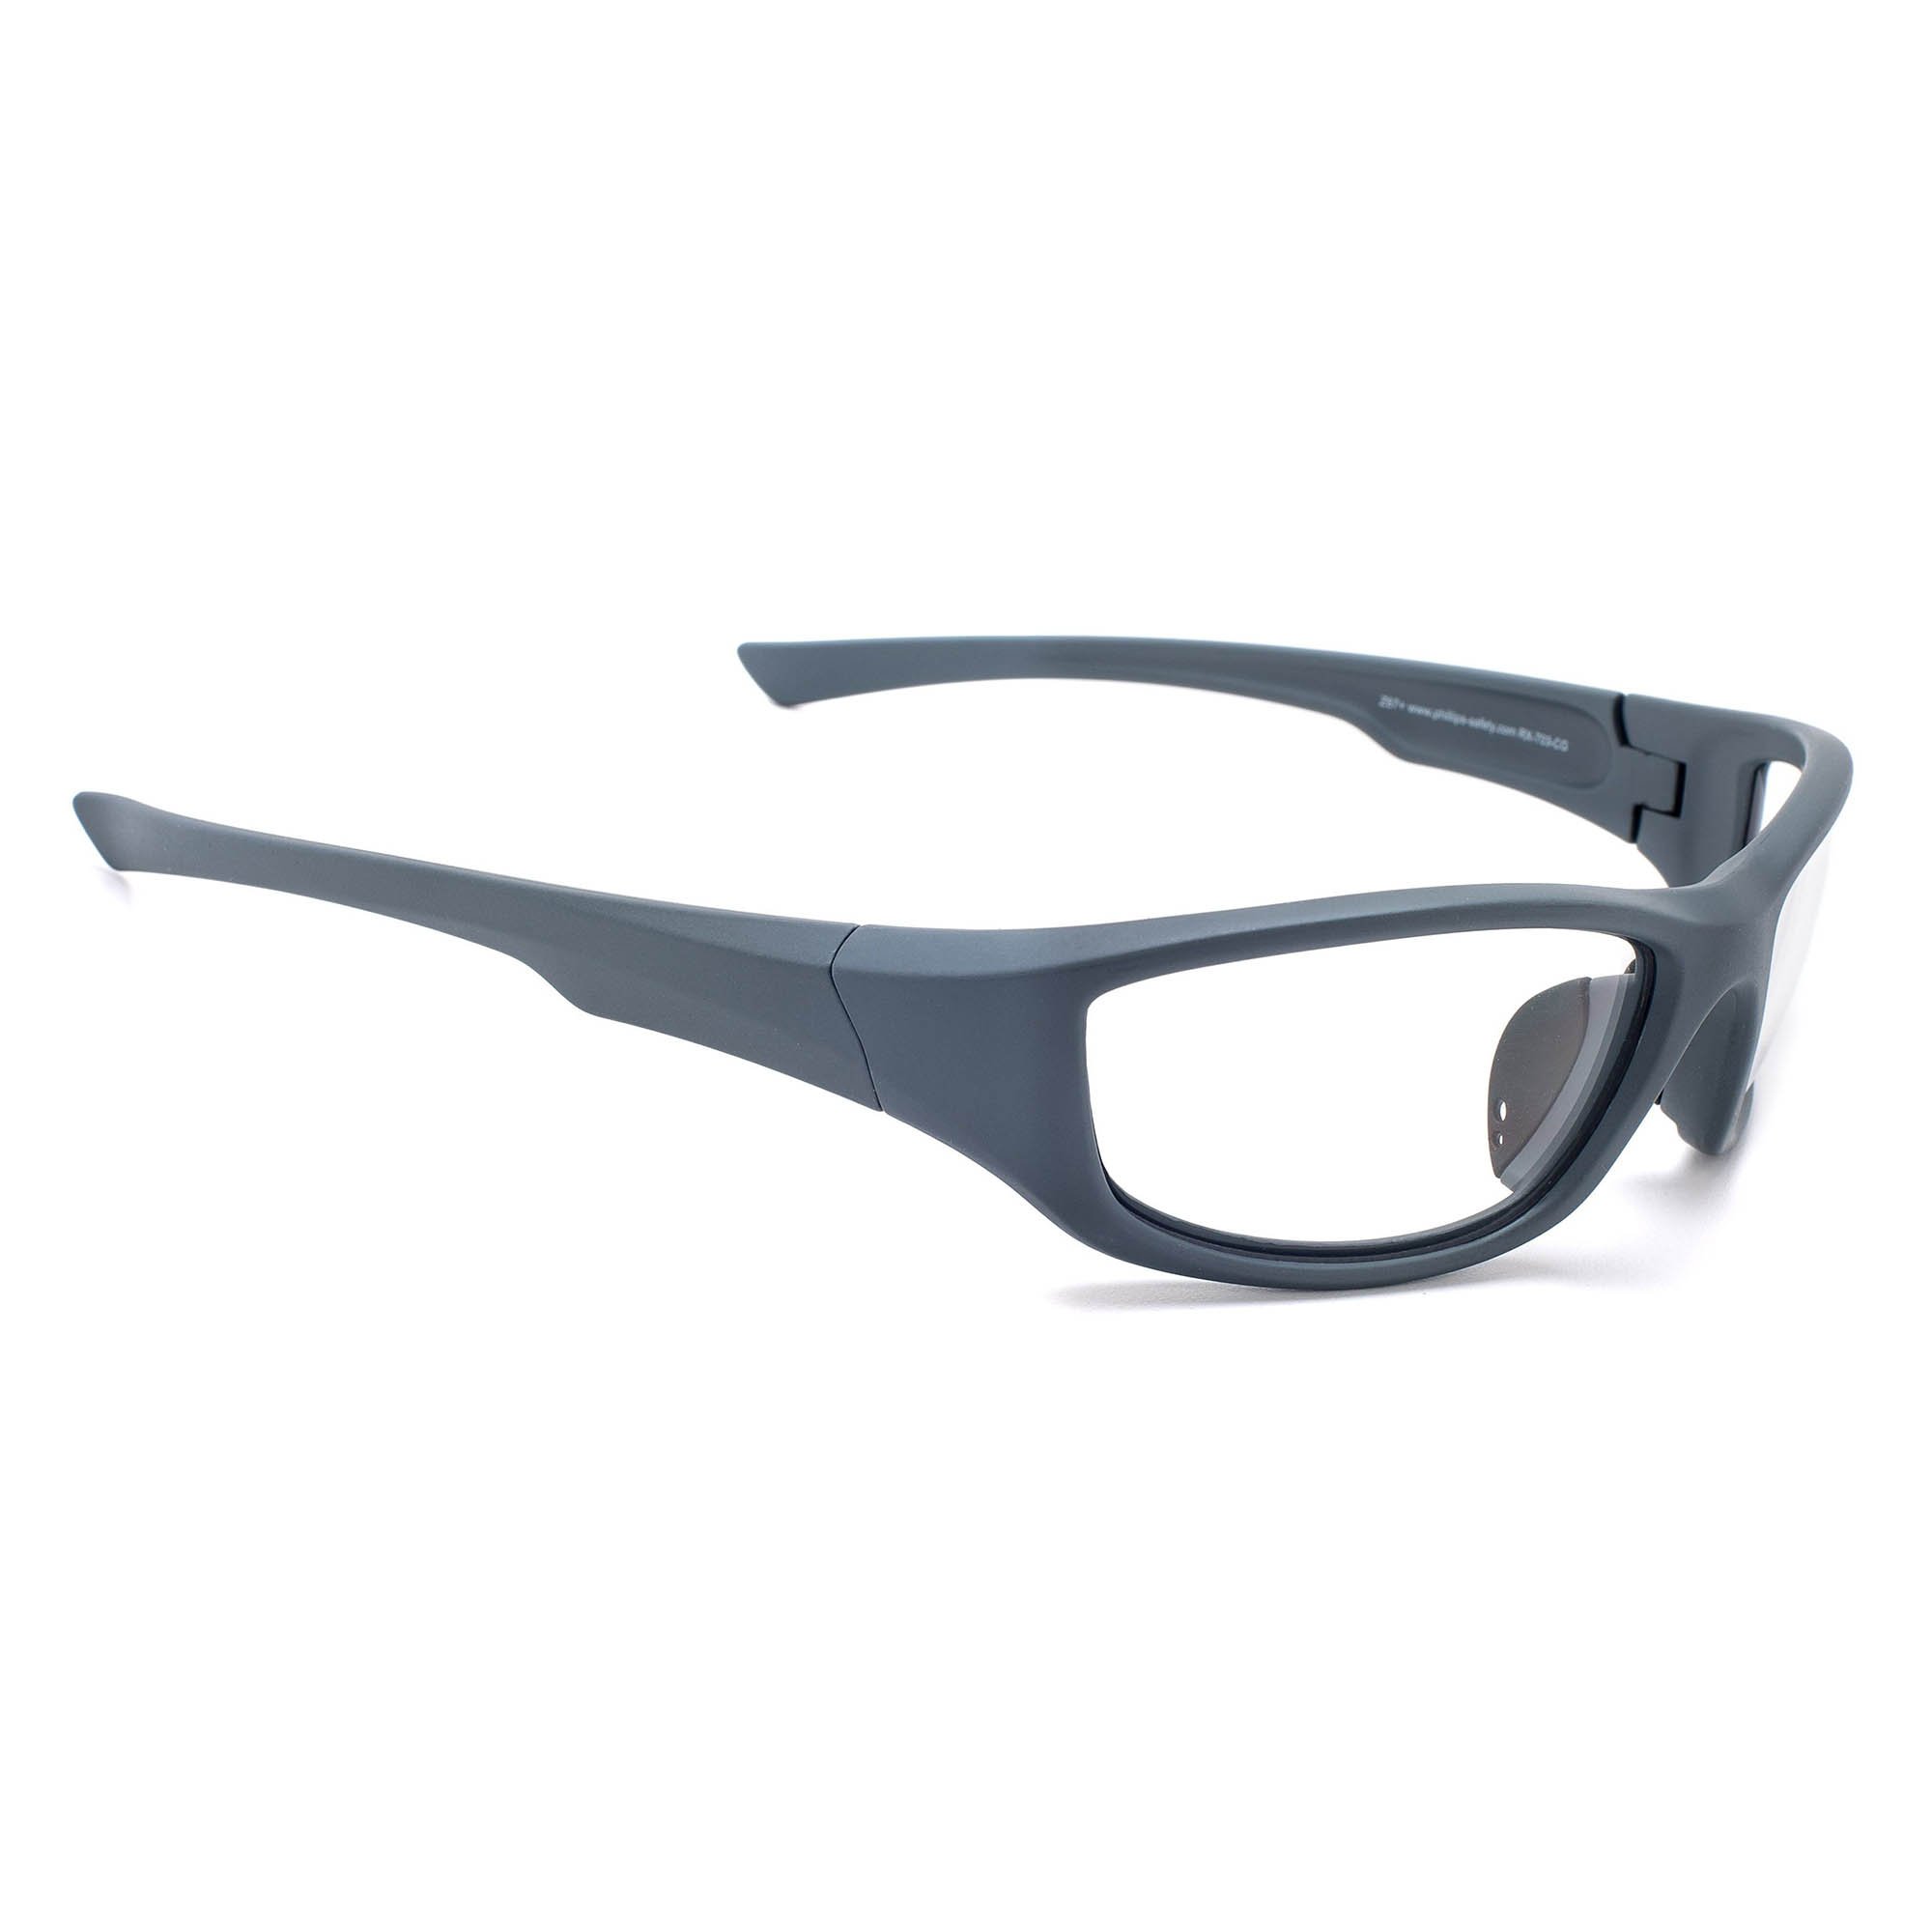 Phillips Safety Oakley Holbrook Radiation Glasses